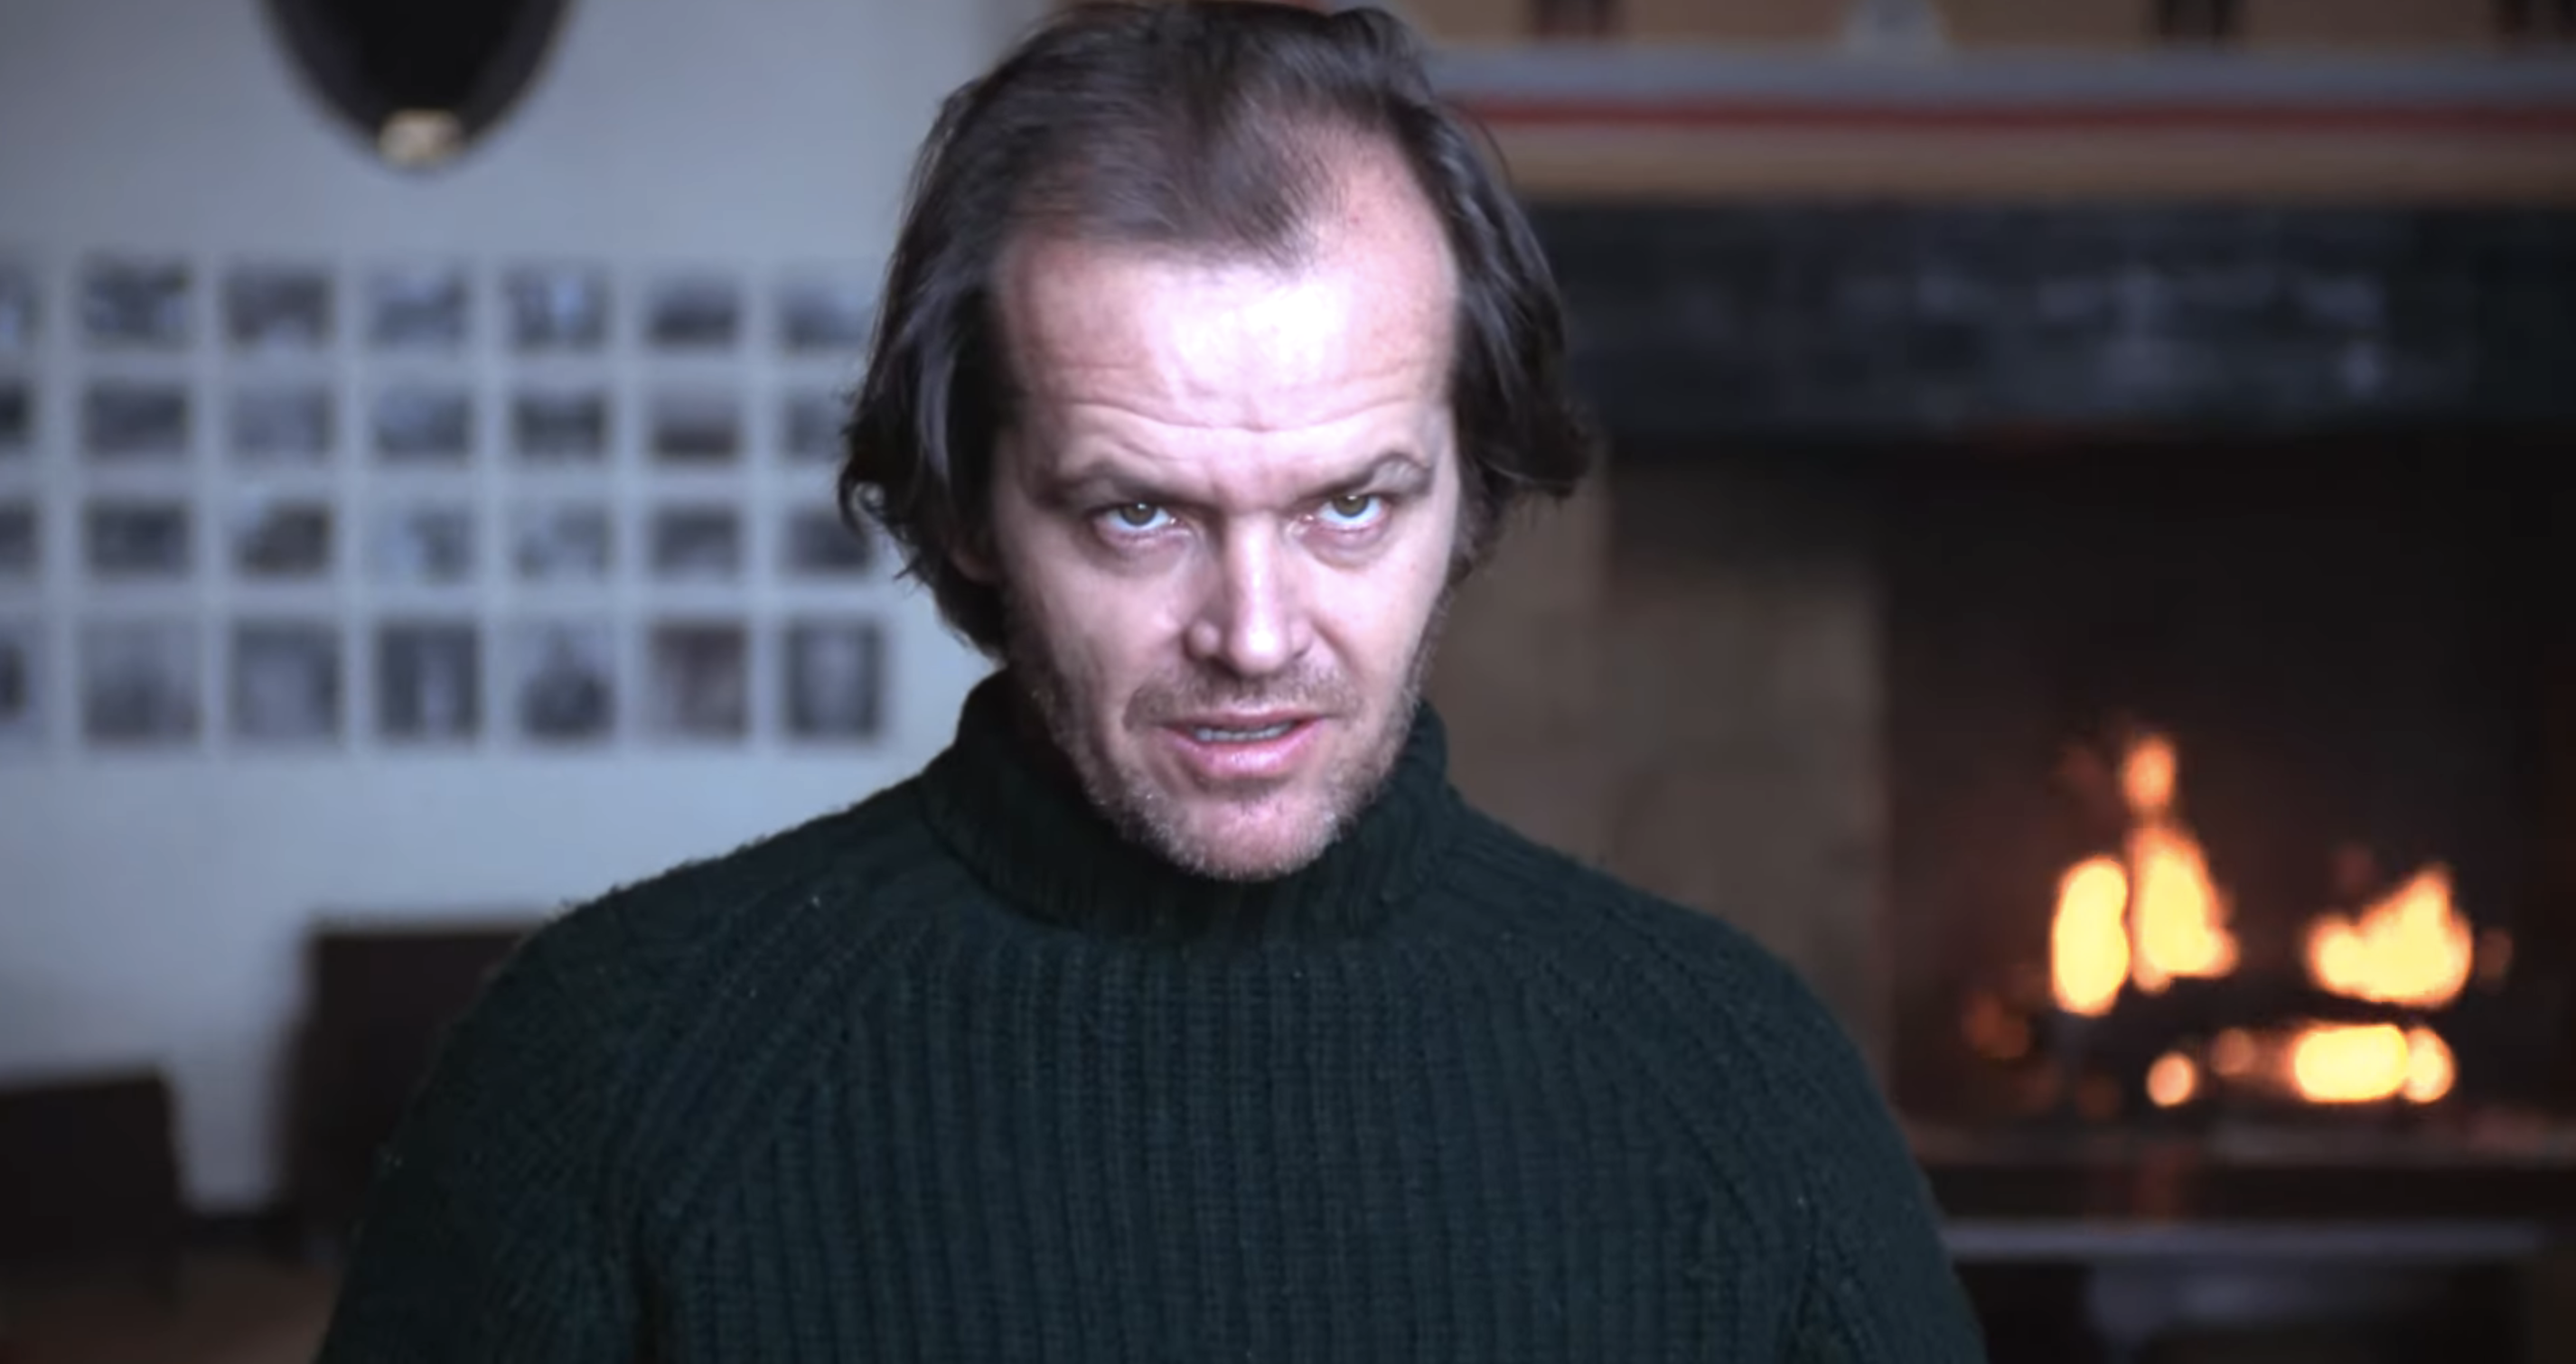 Jack Nicholson in a turtleneck looking scary as Jack Torrance